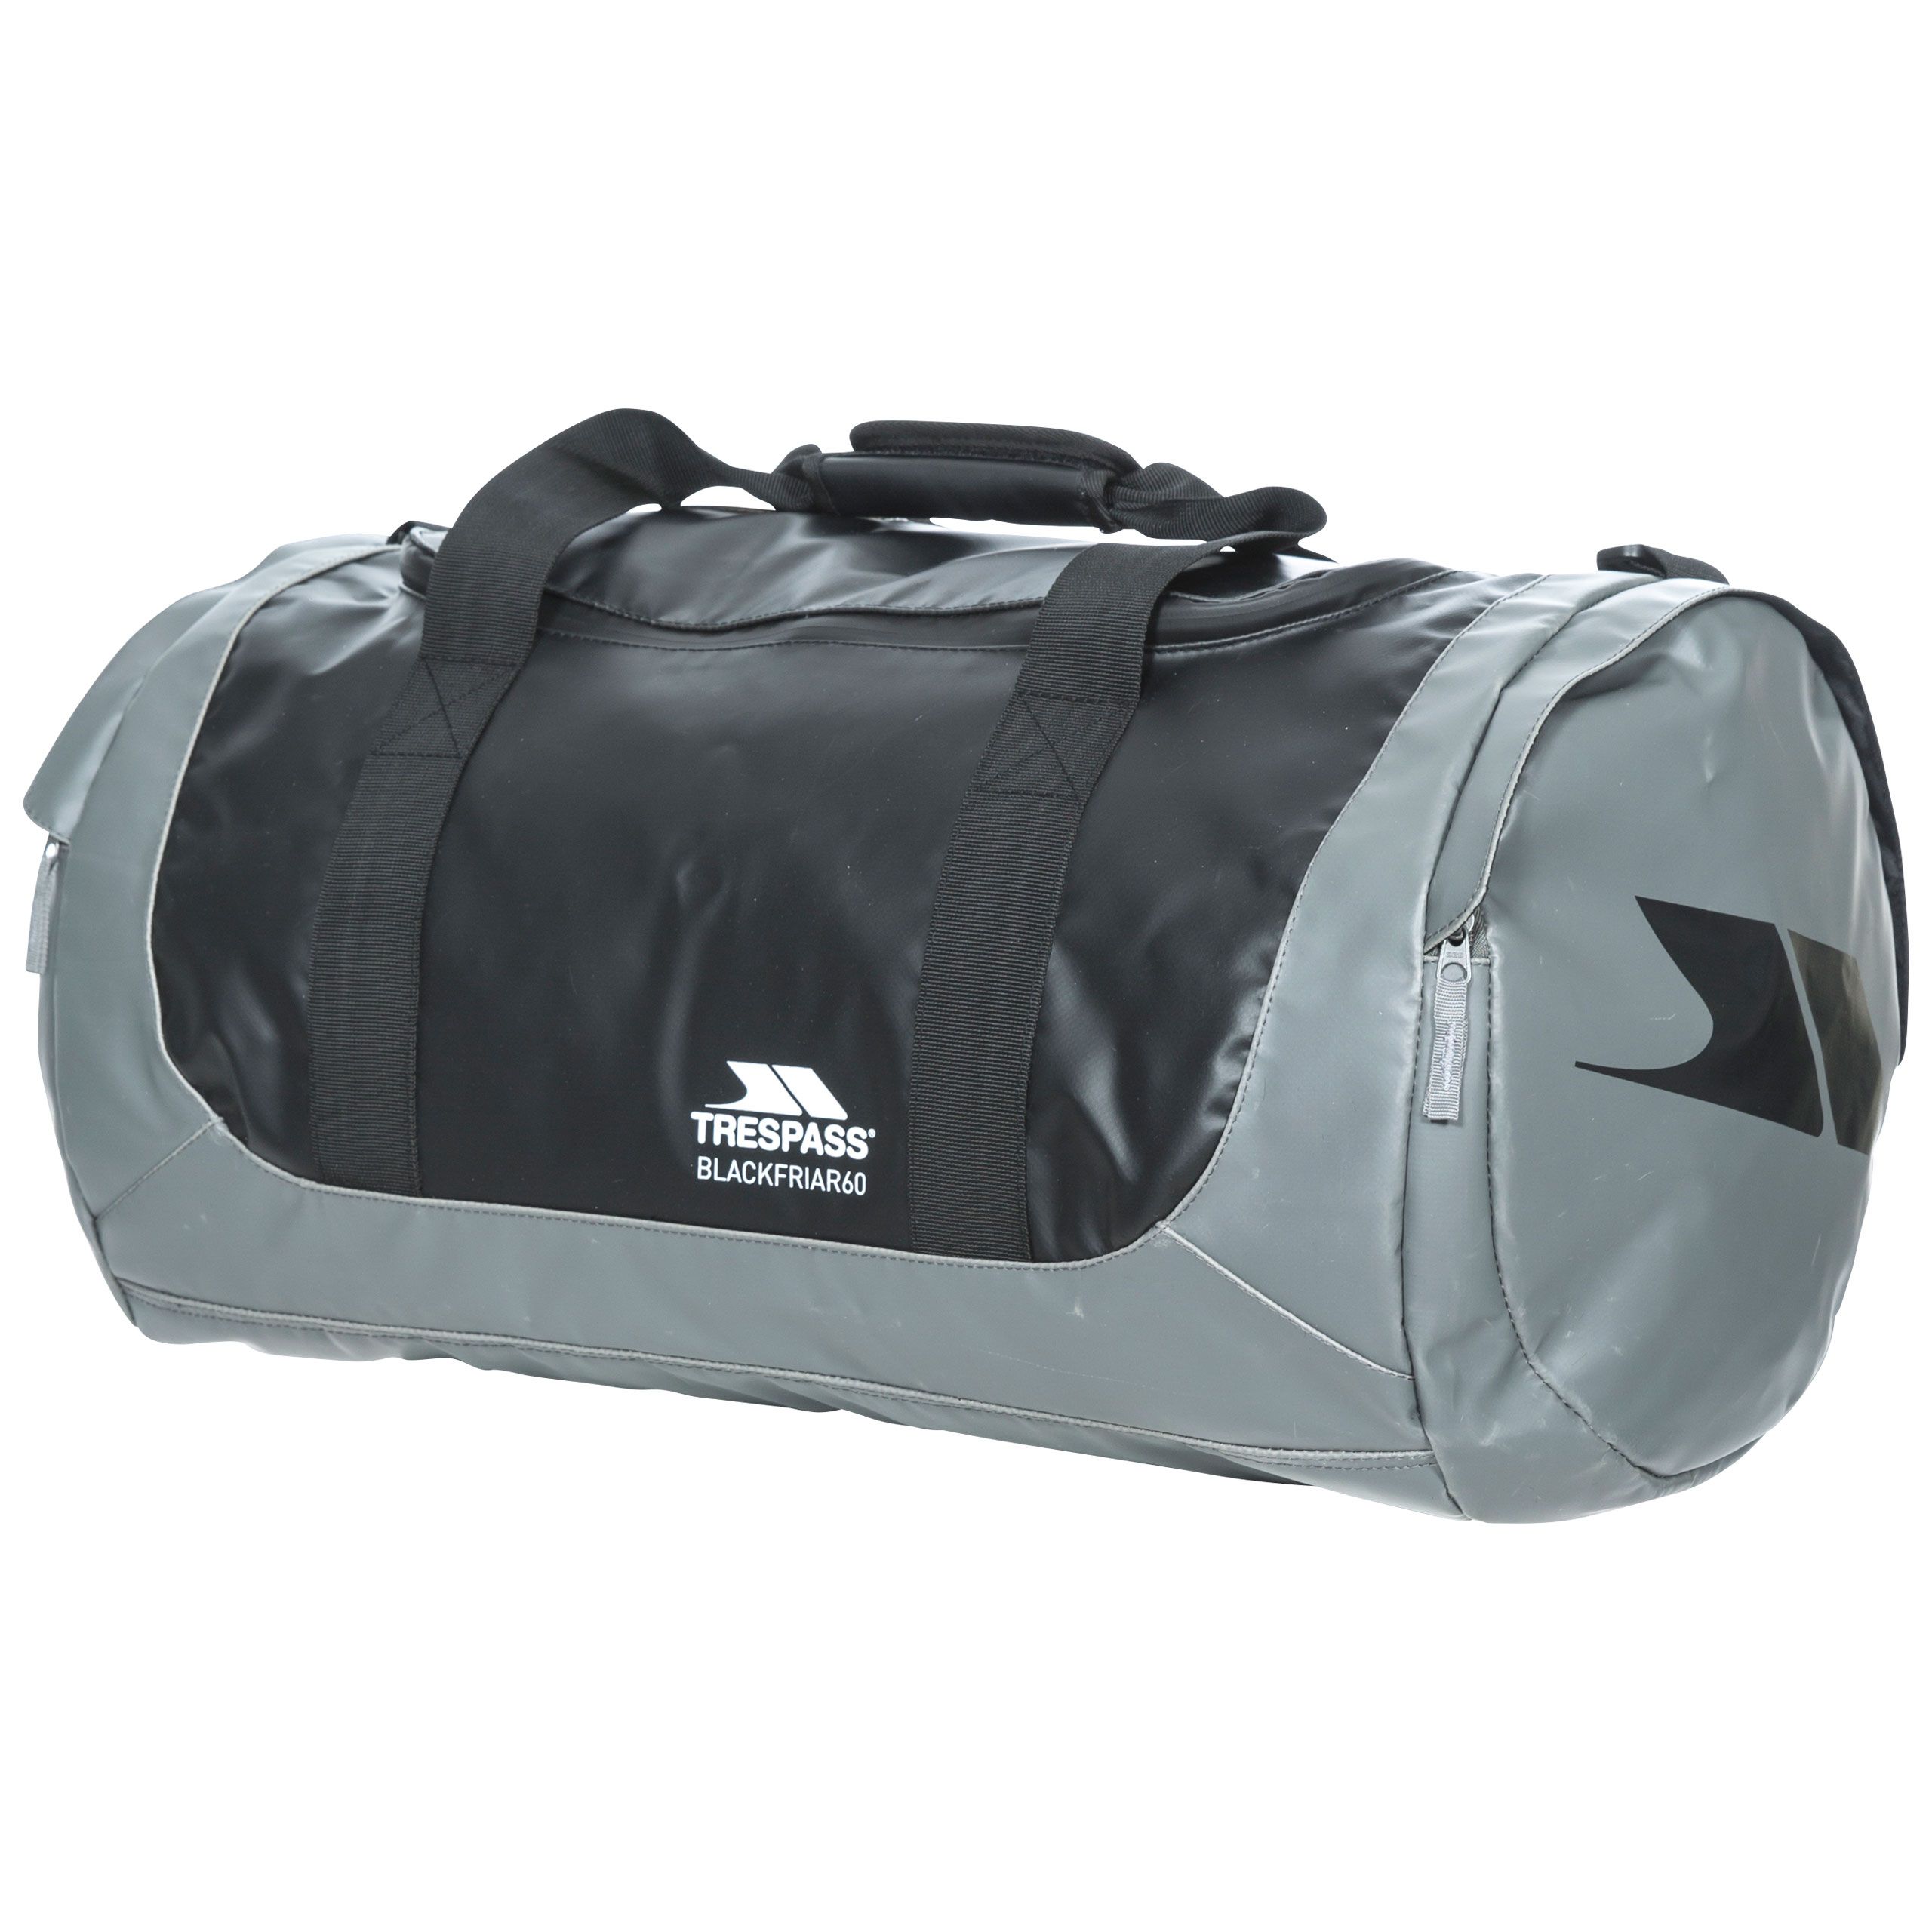 Blackfriar 60 - 60 Litre Waterproof Duffle Bag